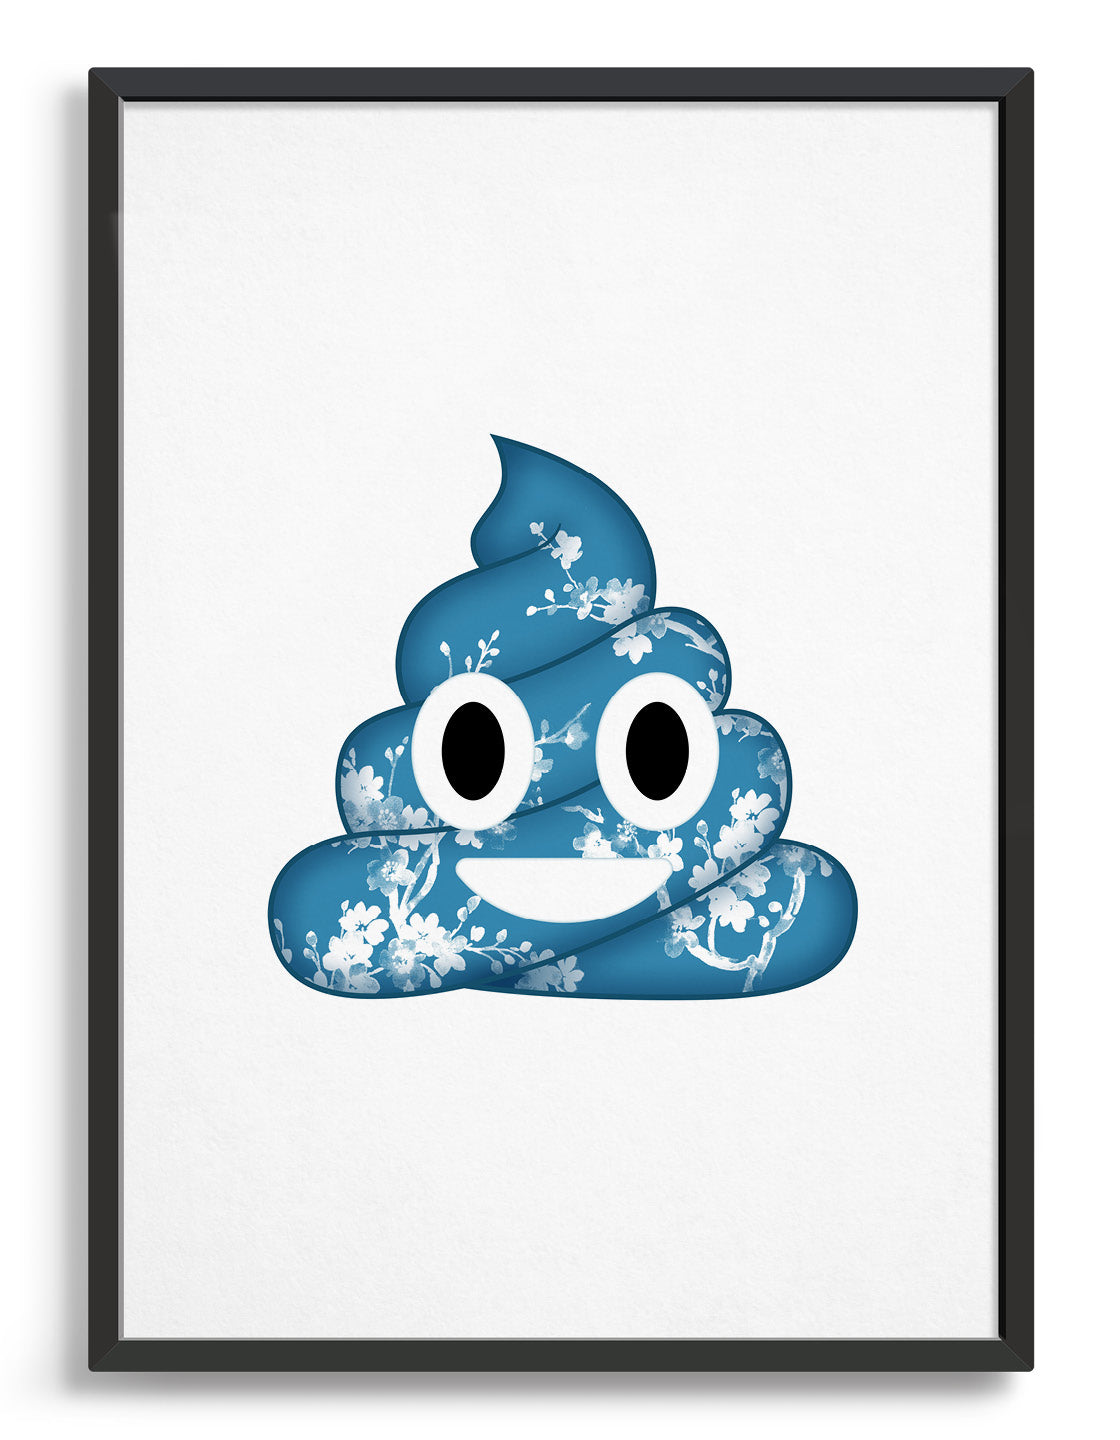 Blue poo emoji